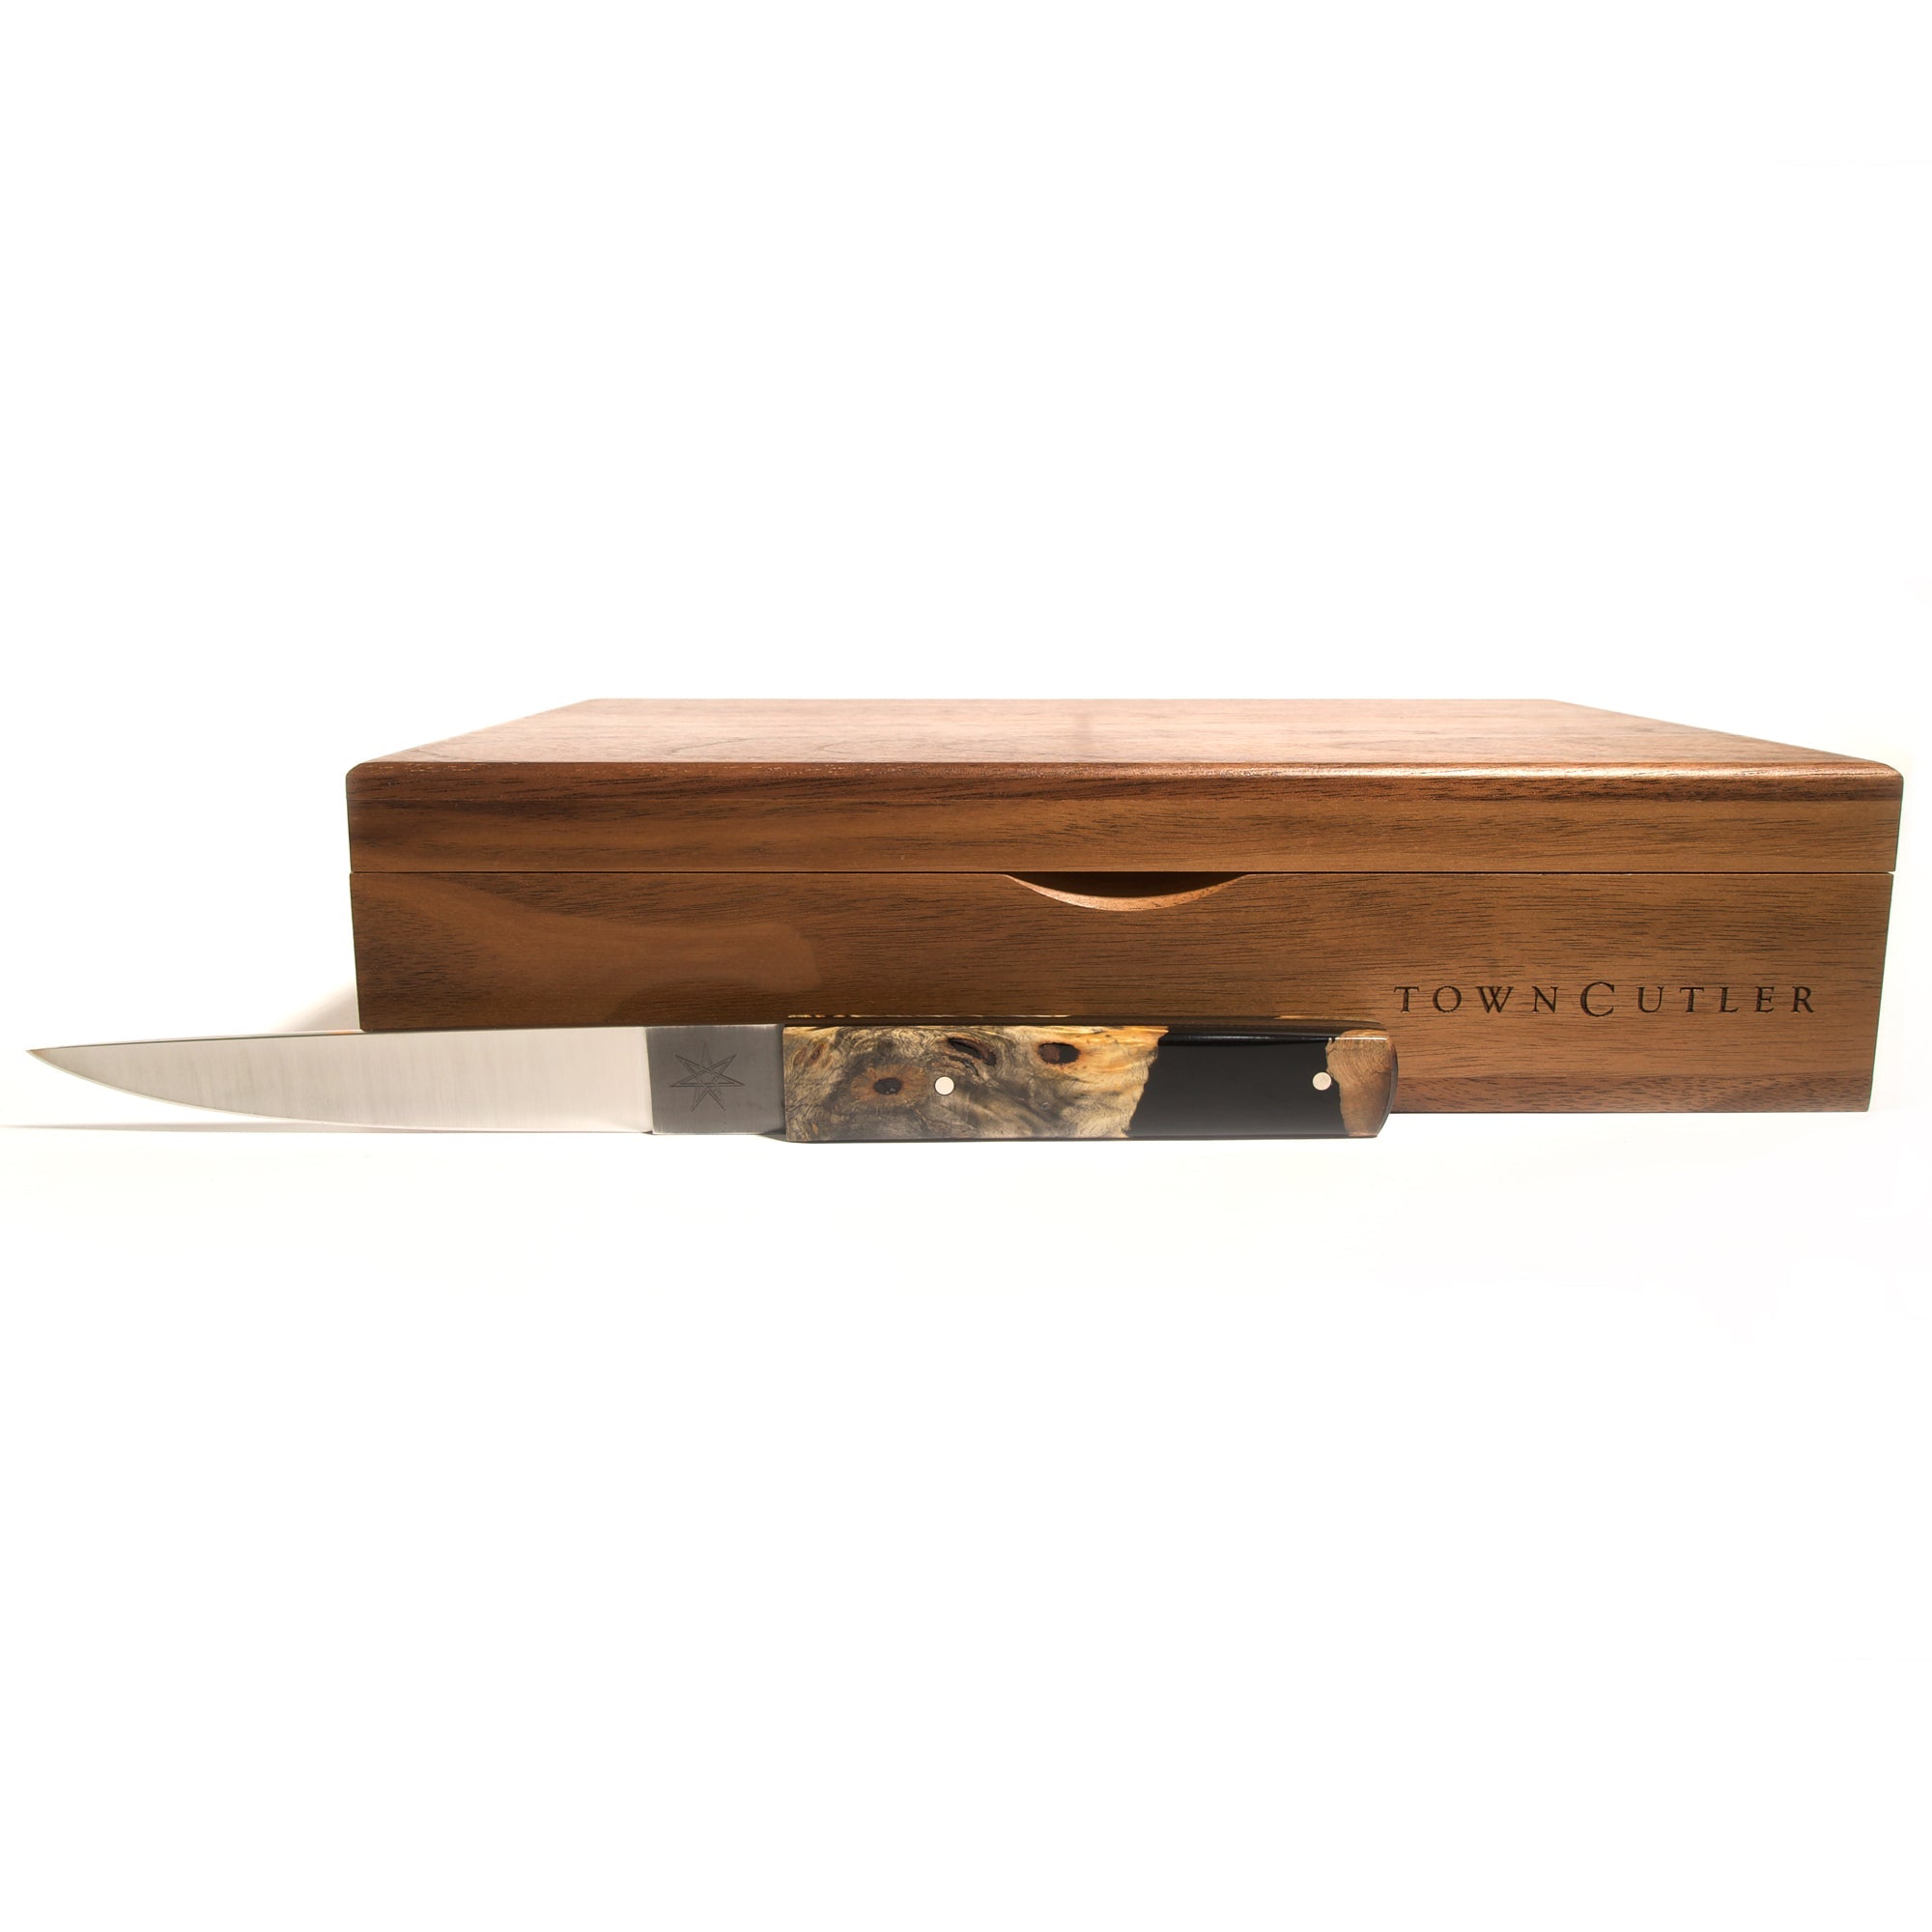 Town Cutler Desert Dawn Steak Knife shown with Walnut storage box for set of four steak knives.